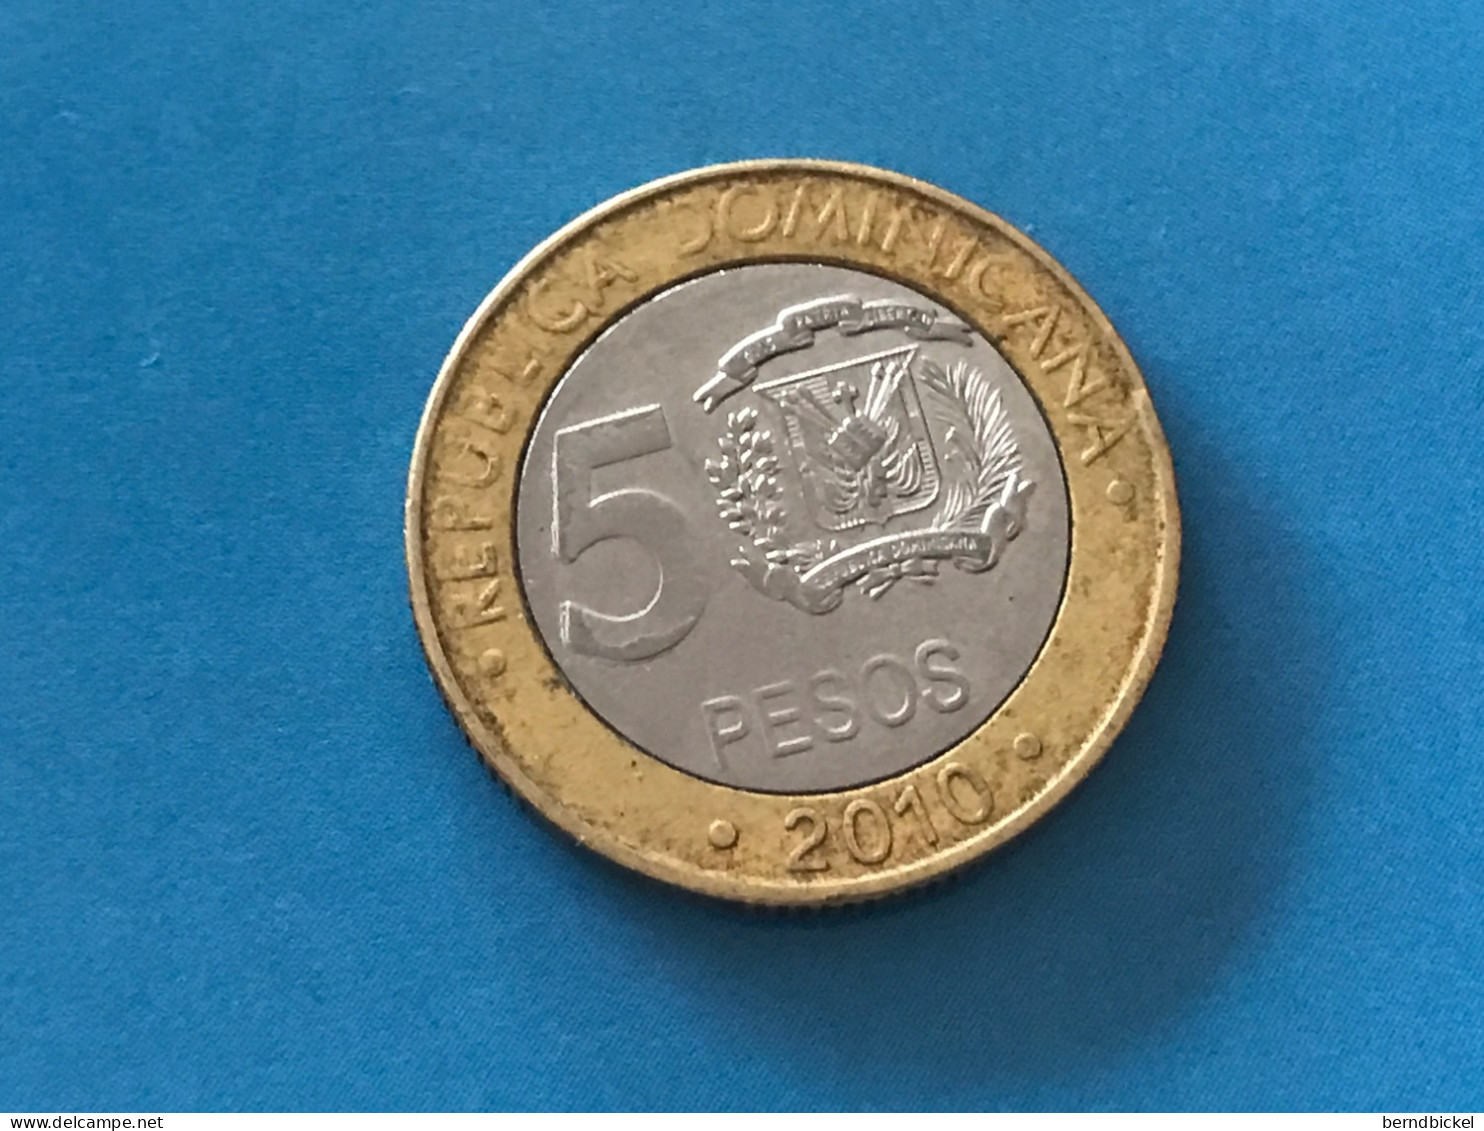 Münze Münzen Umlaufmünze Dominikanische Republik 5 Pesos 2010 - Dominicaine